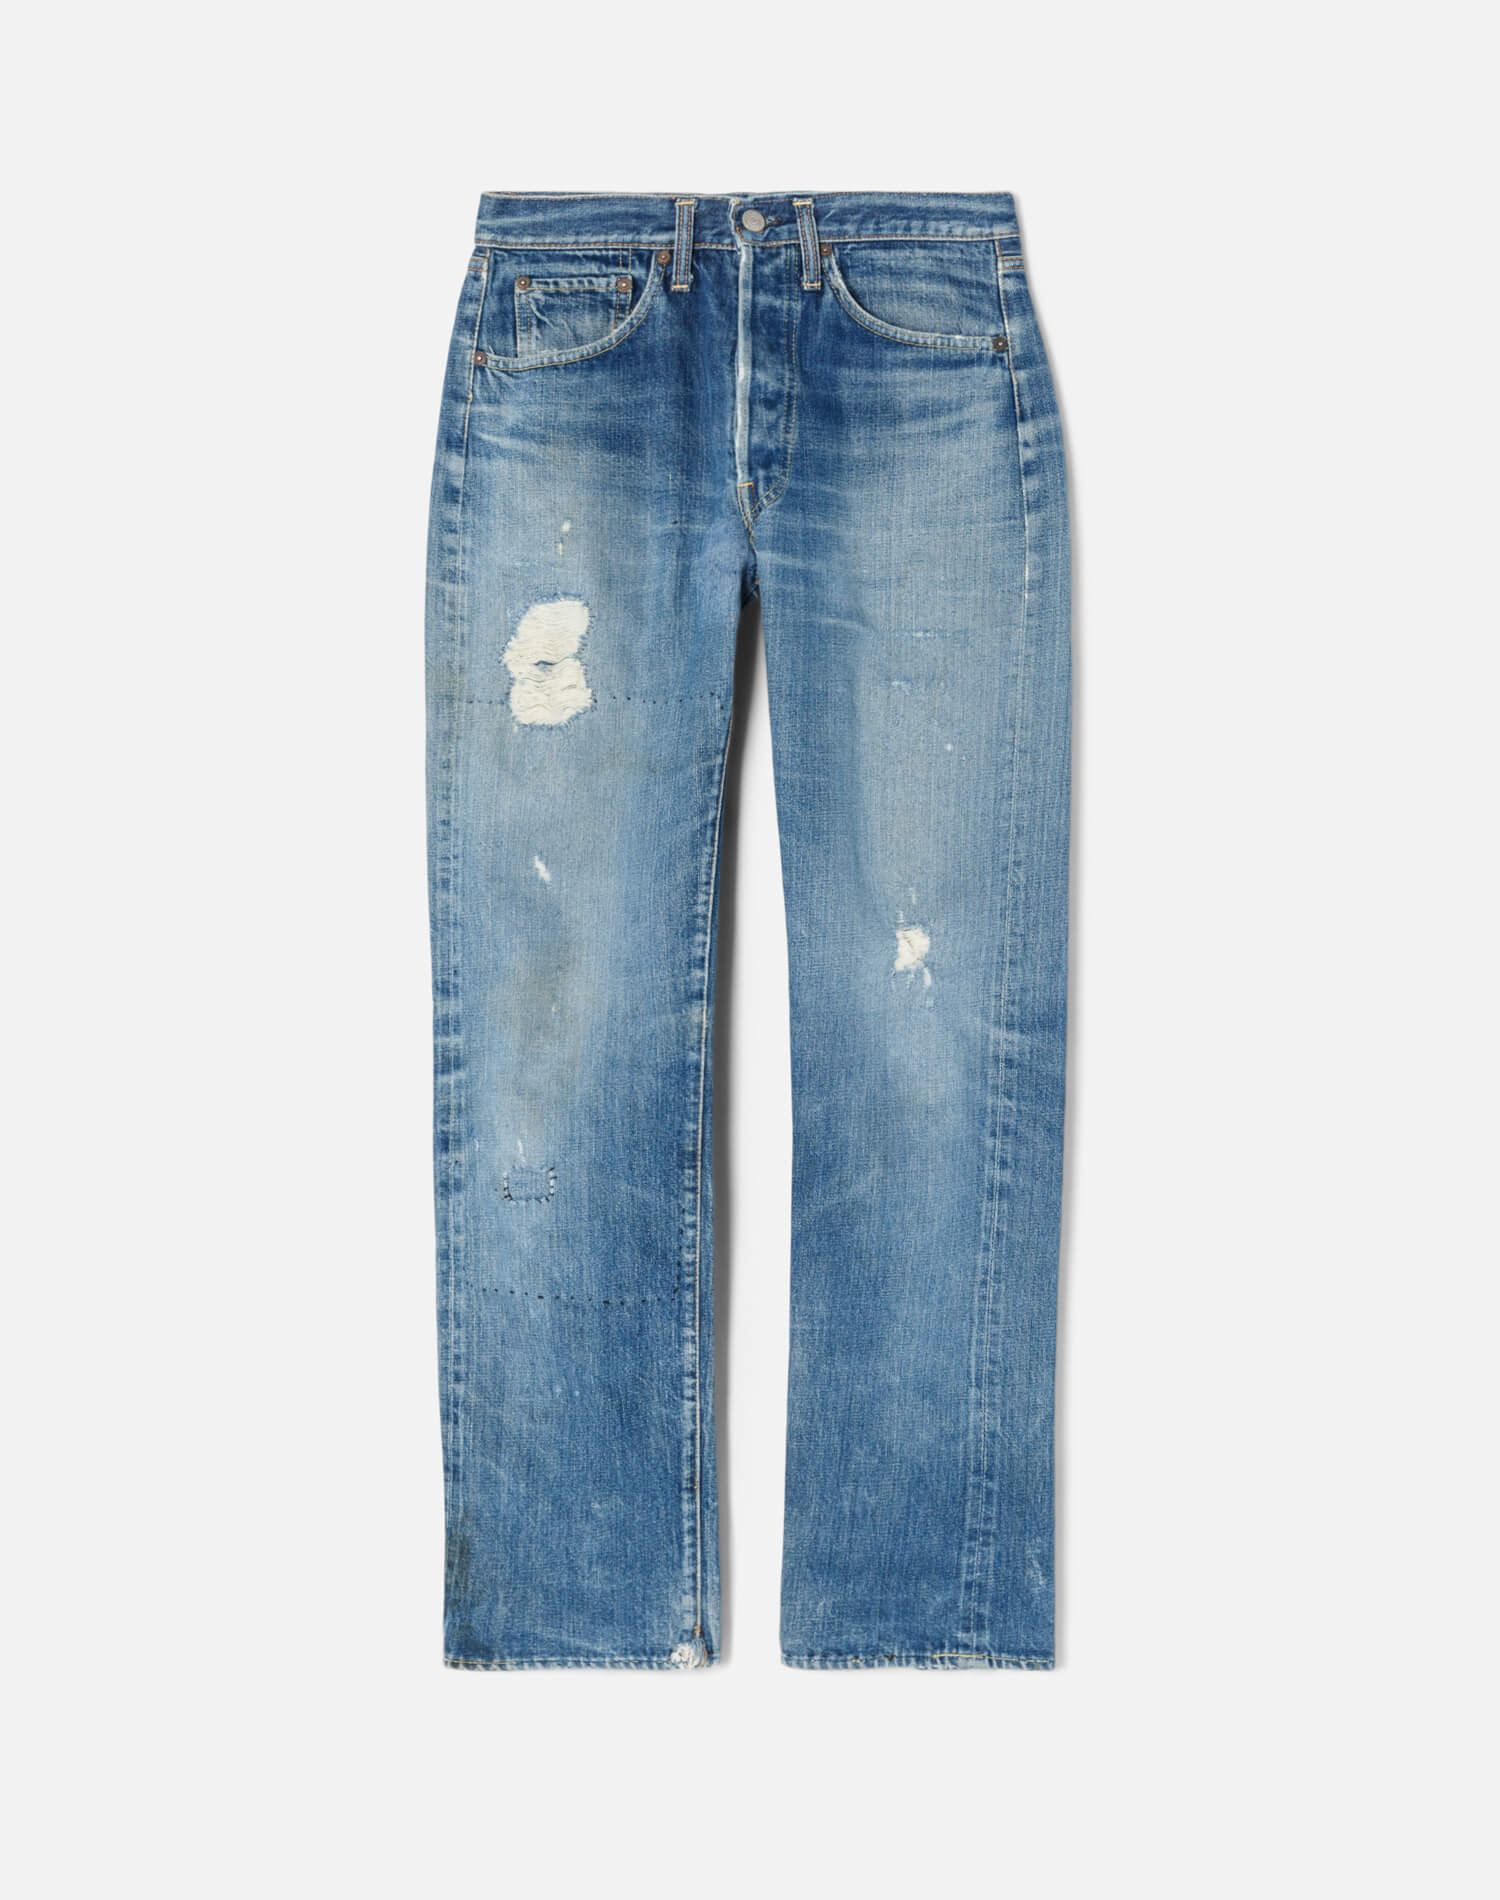 60s Levi's Big E 501 Jeans - #654